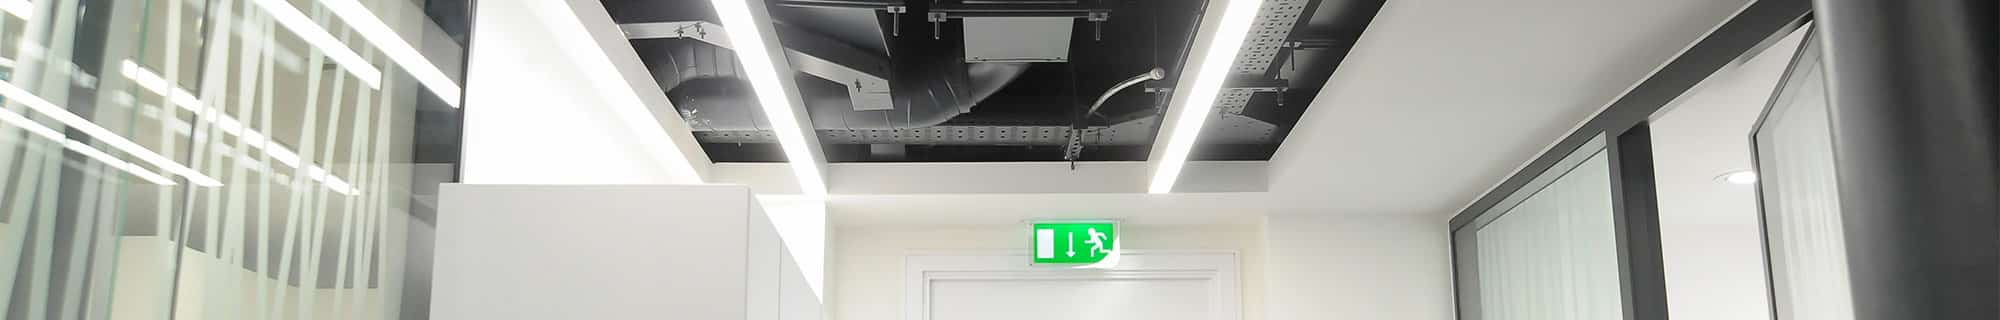 recessed emergency exit lighting